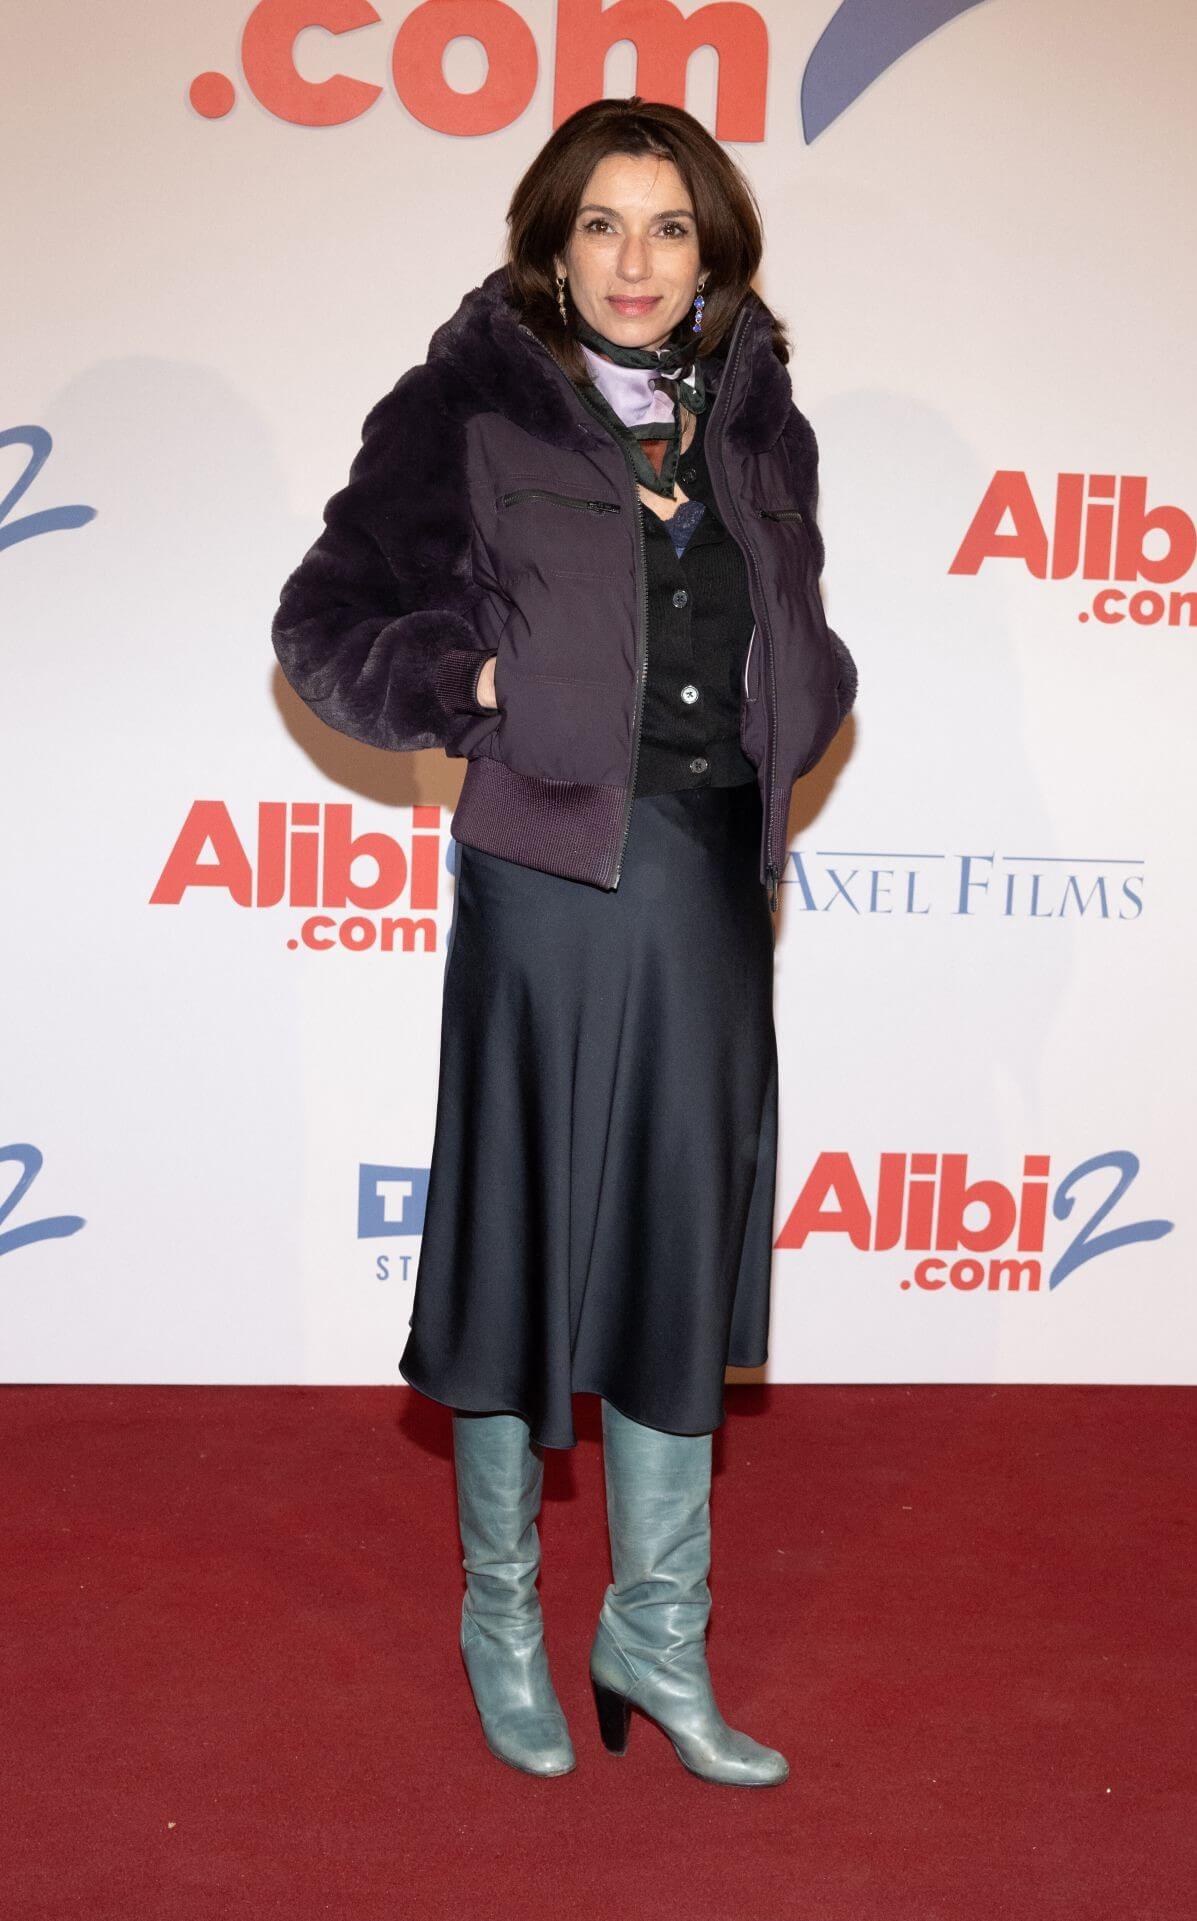 Aure Atika  In Black Top &  Skirt With Bomber Jacket At “Alibi.com 2” Premiere in Paris